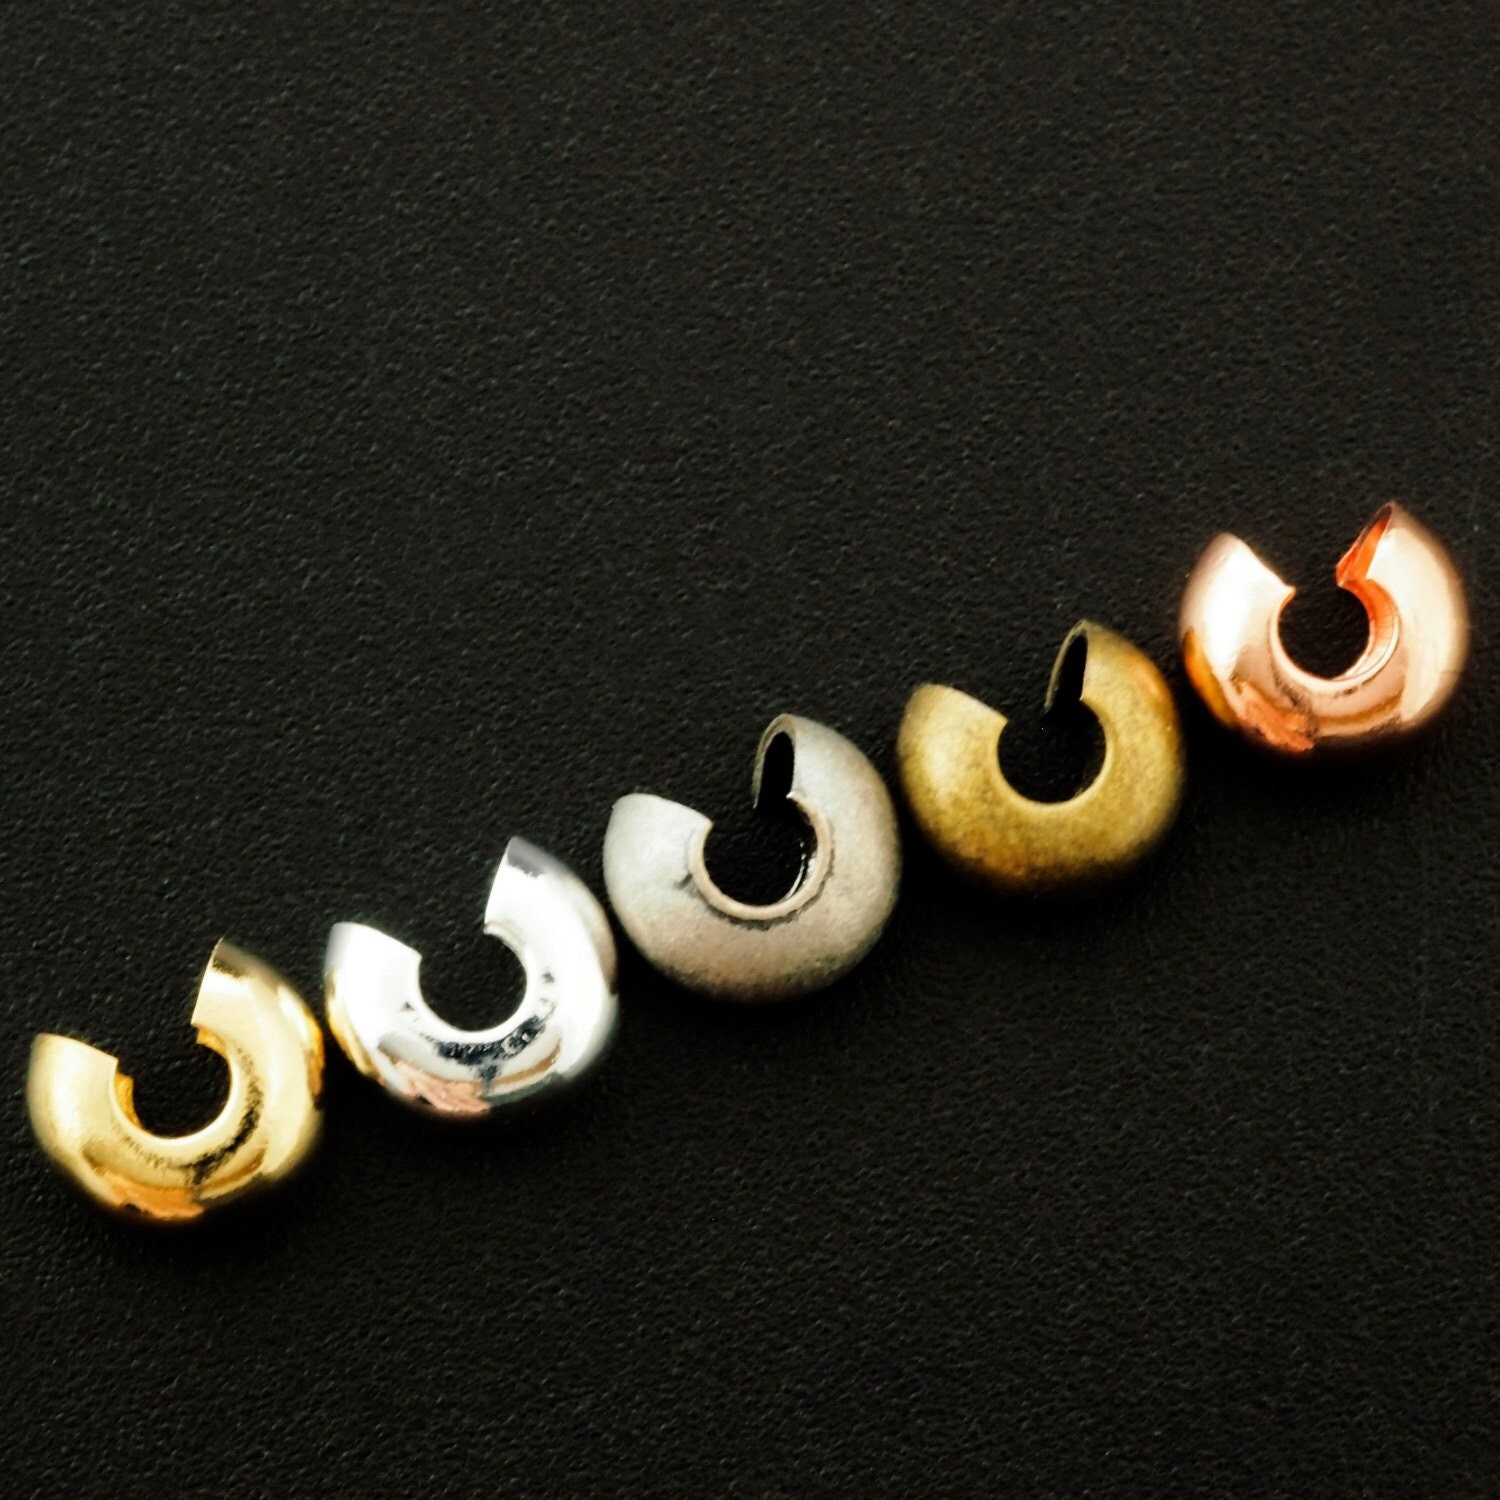  Teaaha 600 PCS Crimp Beads for Jewelry Making, Stainless Steel Crimp  Beads Crimp Covers 4mm Crimp Bead Covers 4mm Crimp Covers for Jewelry  Making Crimp Bead for Jewellery Making Bead Chain